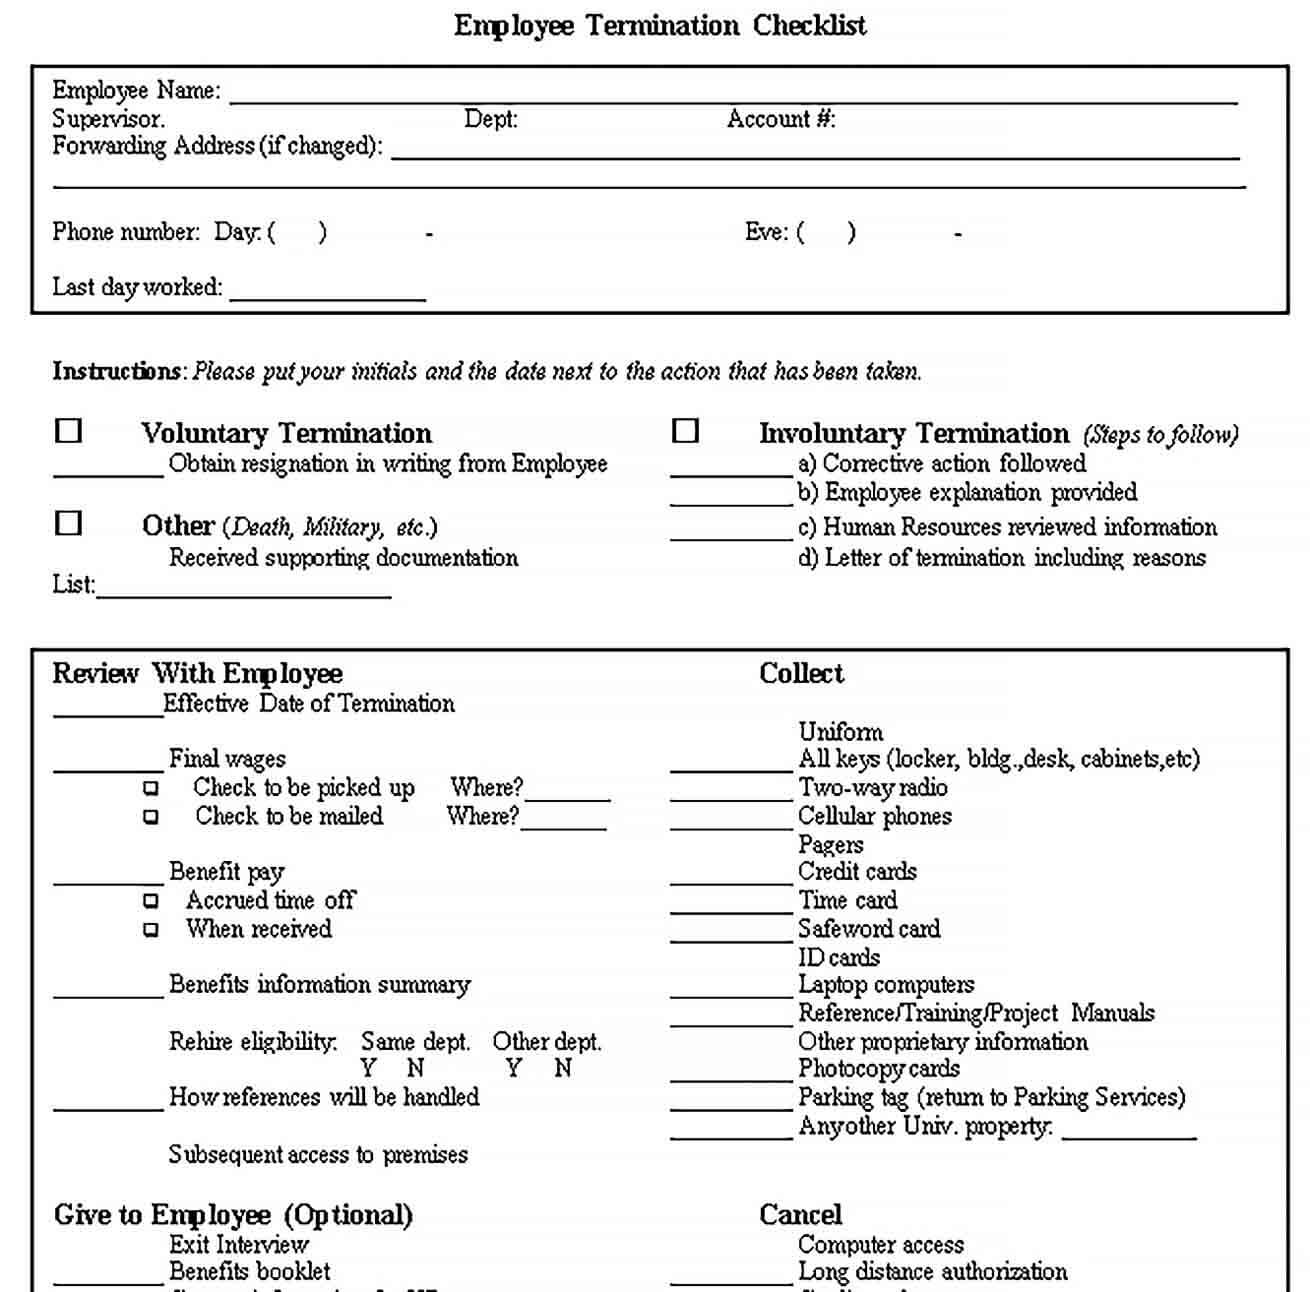 Sample Employee Termination Checklist DOC Format Template